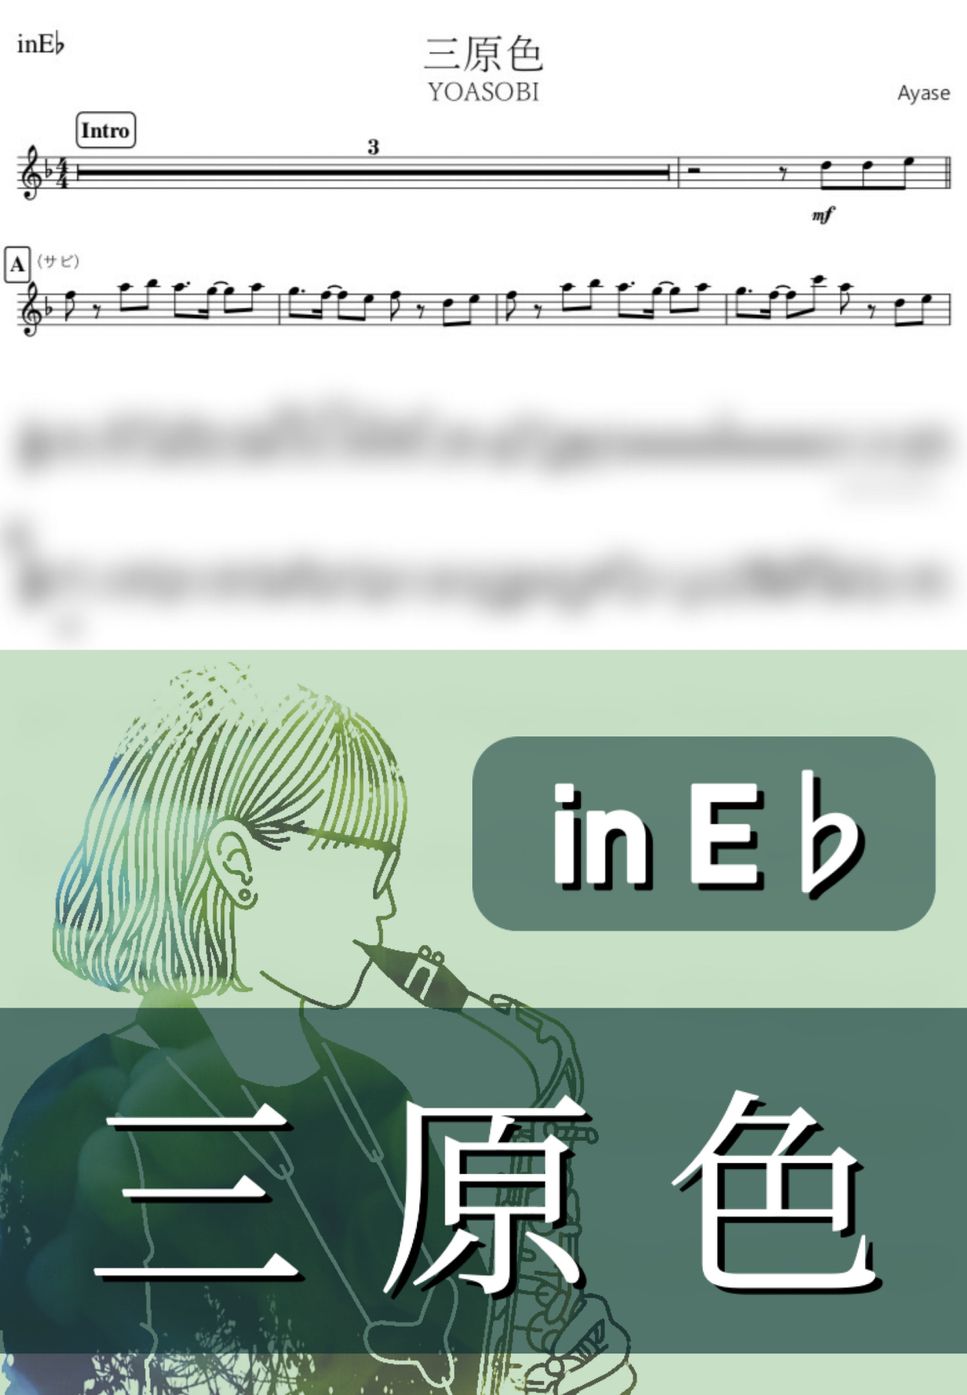 YOASOBI - 三原色 (E♭) by kanamusic